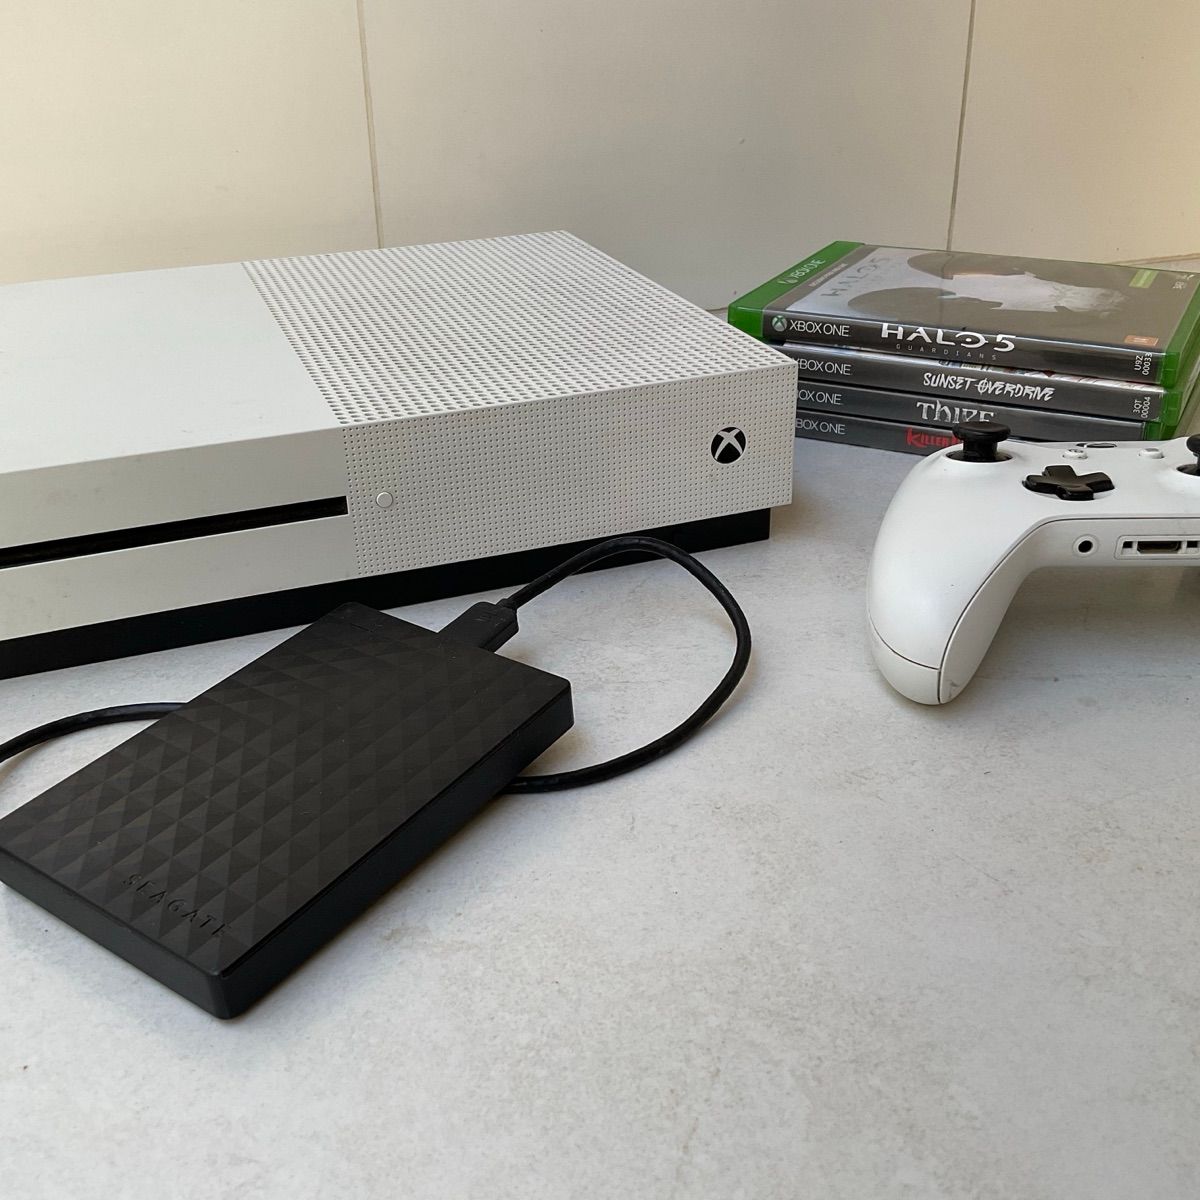 Conta Fortnite a Venda | Console de Videogame Xbox Nunca Usado 88170447 |  enjoei